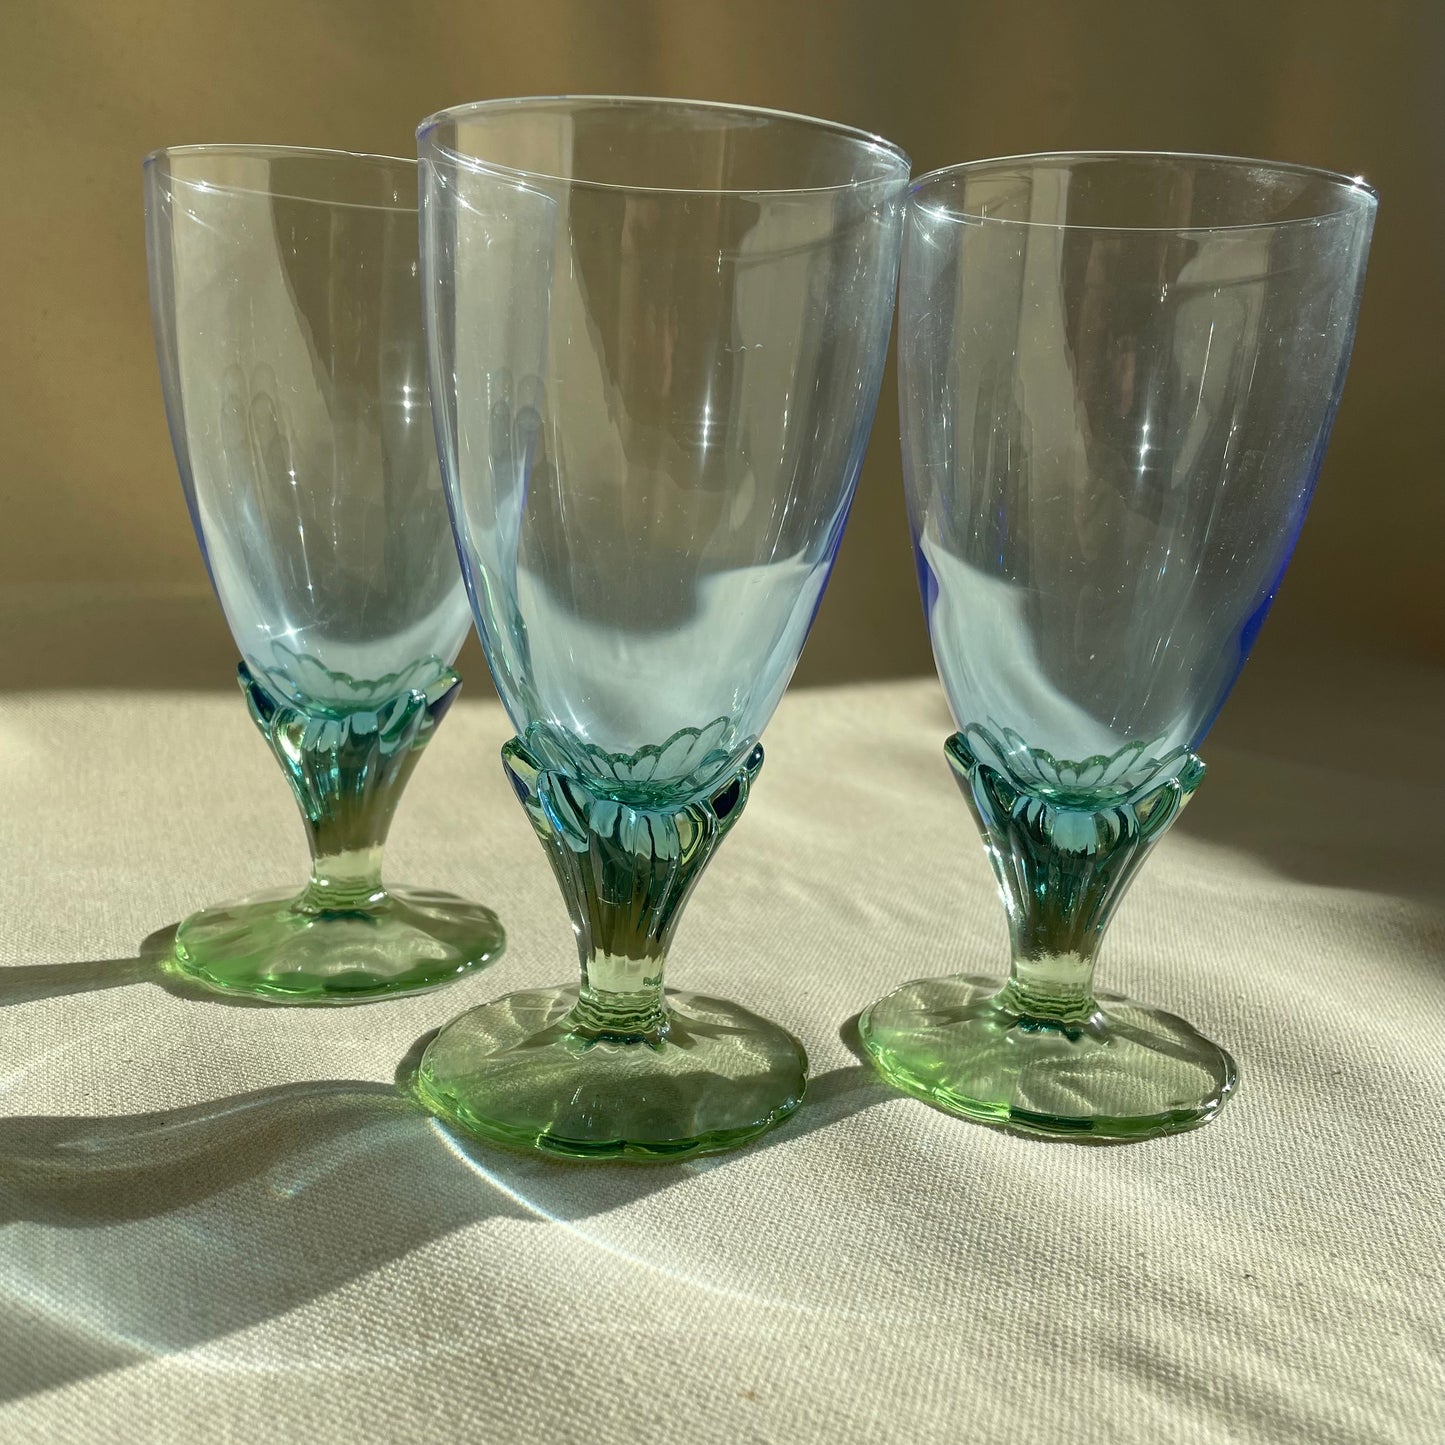 Vintage Bi-colored Water Goblets, 'bahia' by Bormioli Rocco- Set of 3